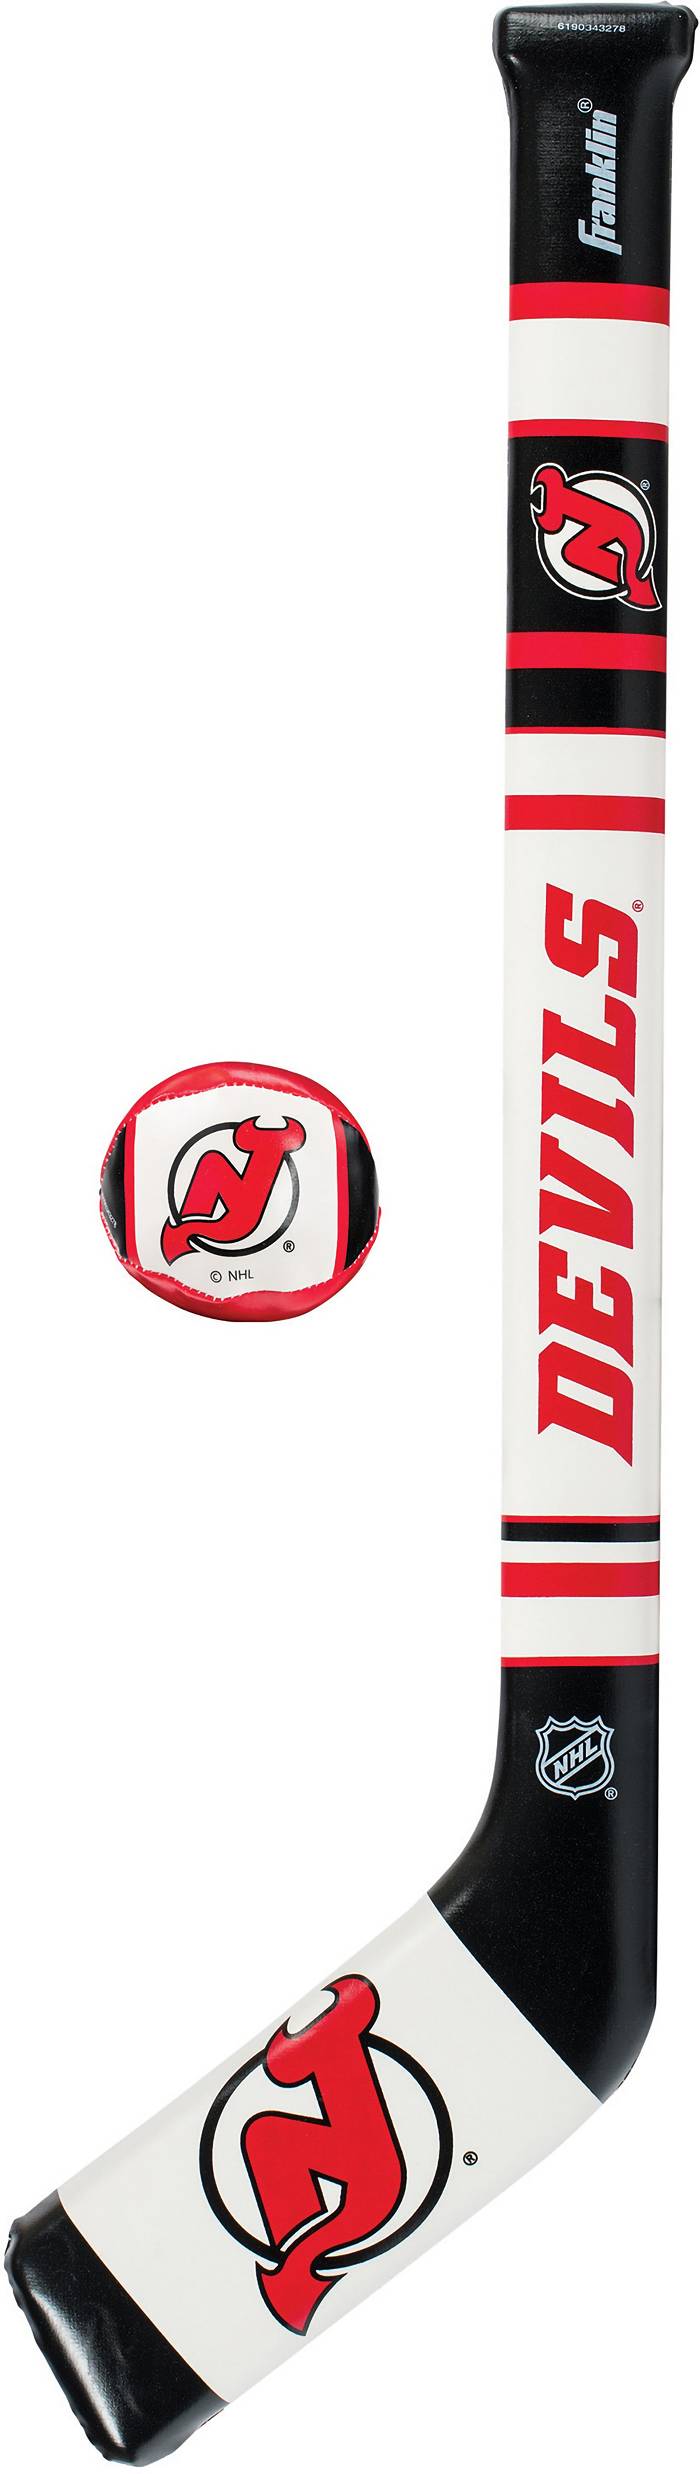 Vintage Hockey - New Jersey Devils (White Devils Wordmark) T-Shirt